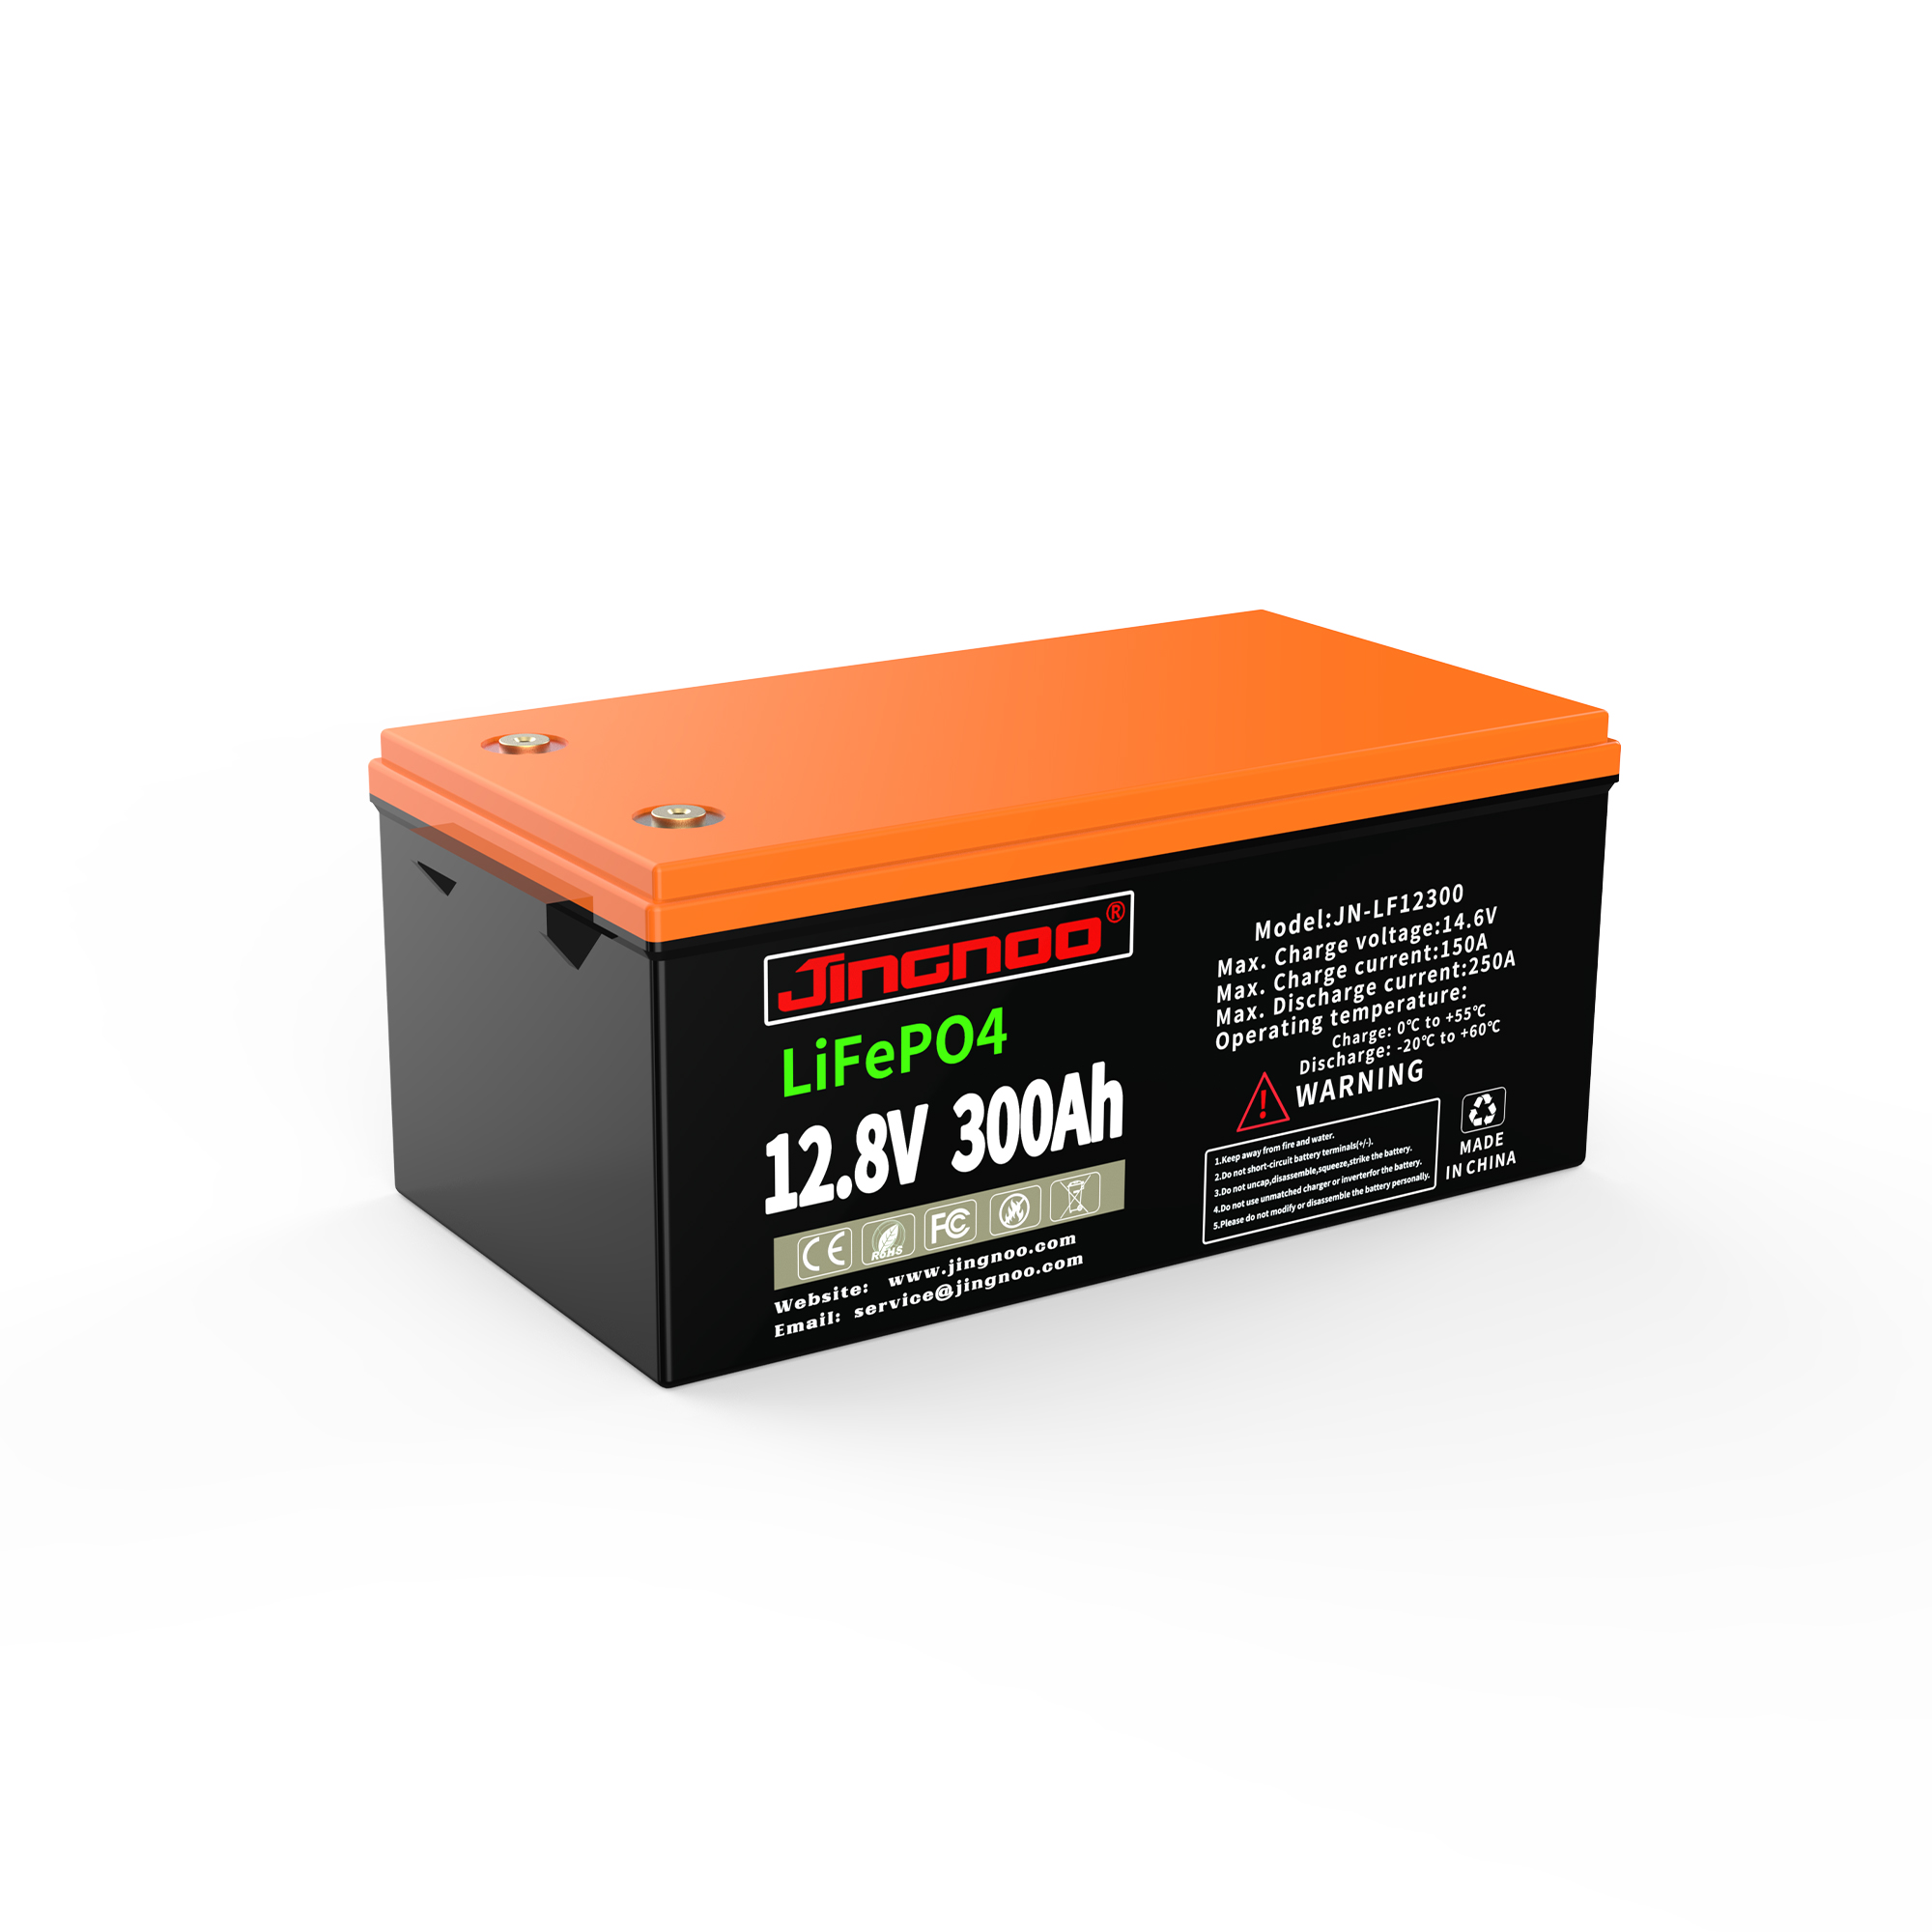 48V 100Ah LiFePO4 Lithium Battery JN-LF48100